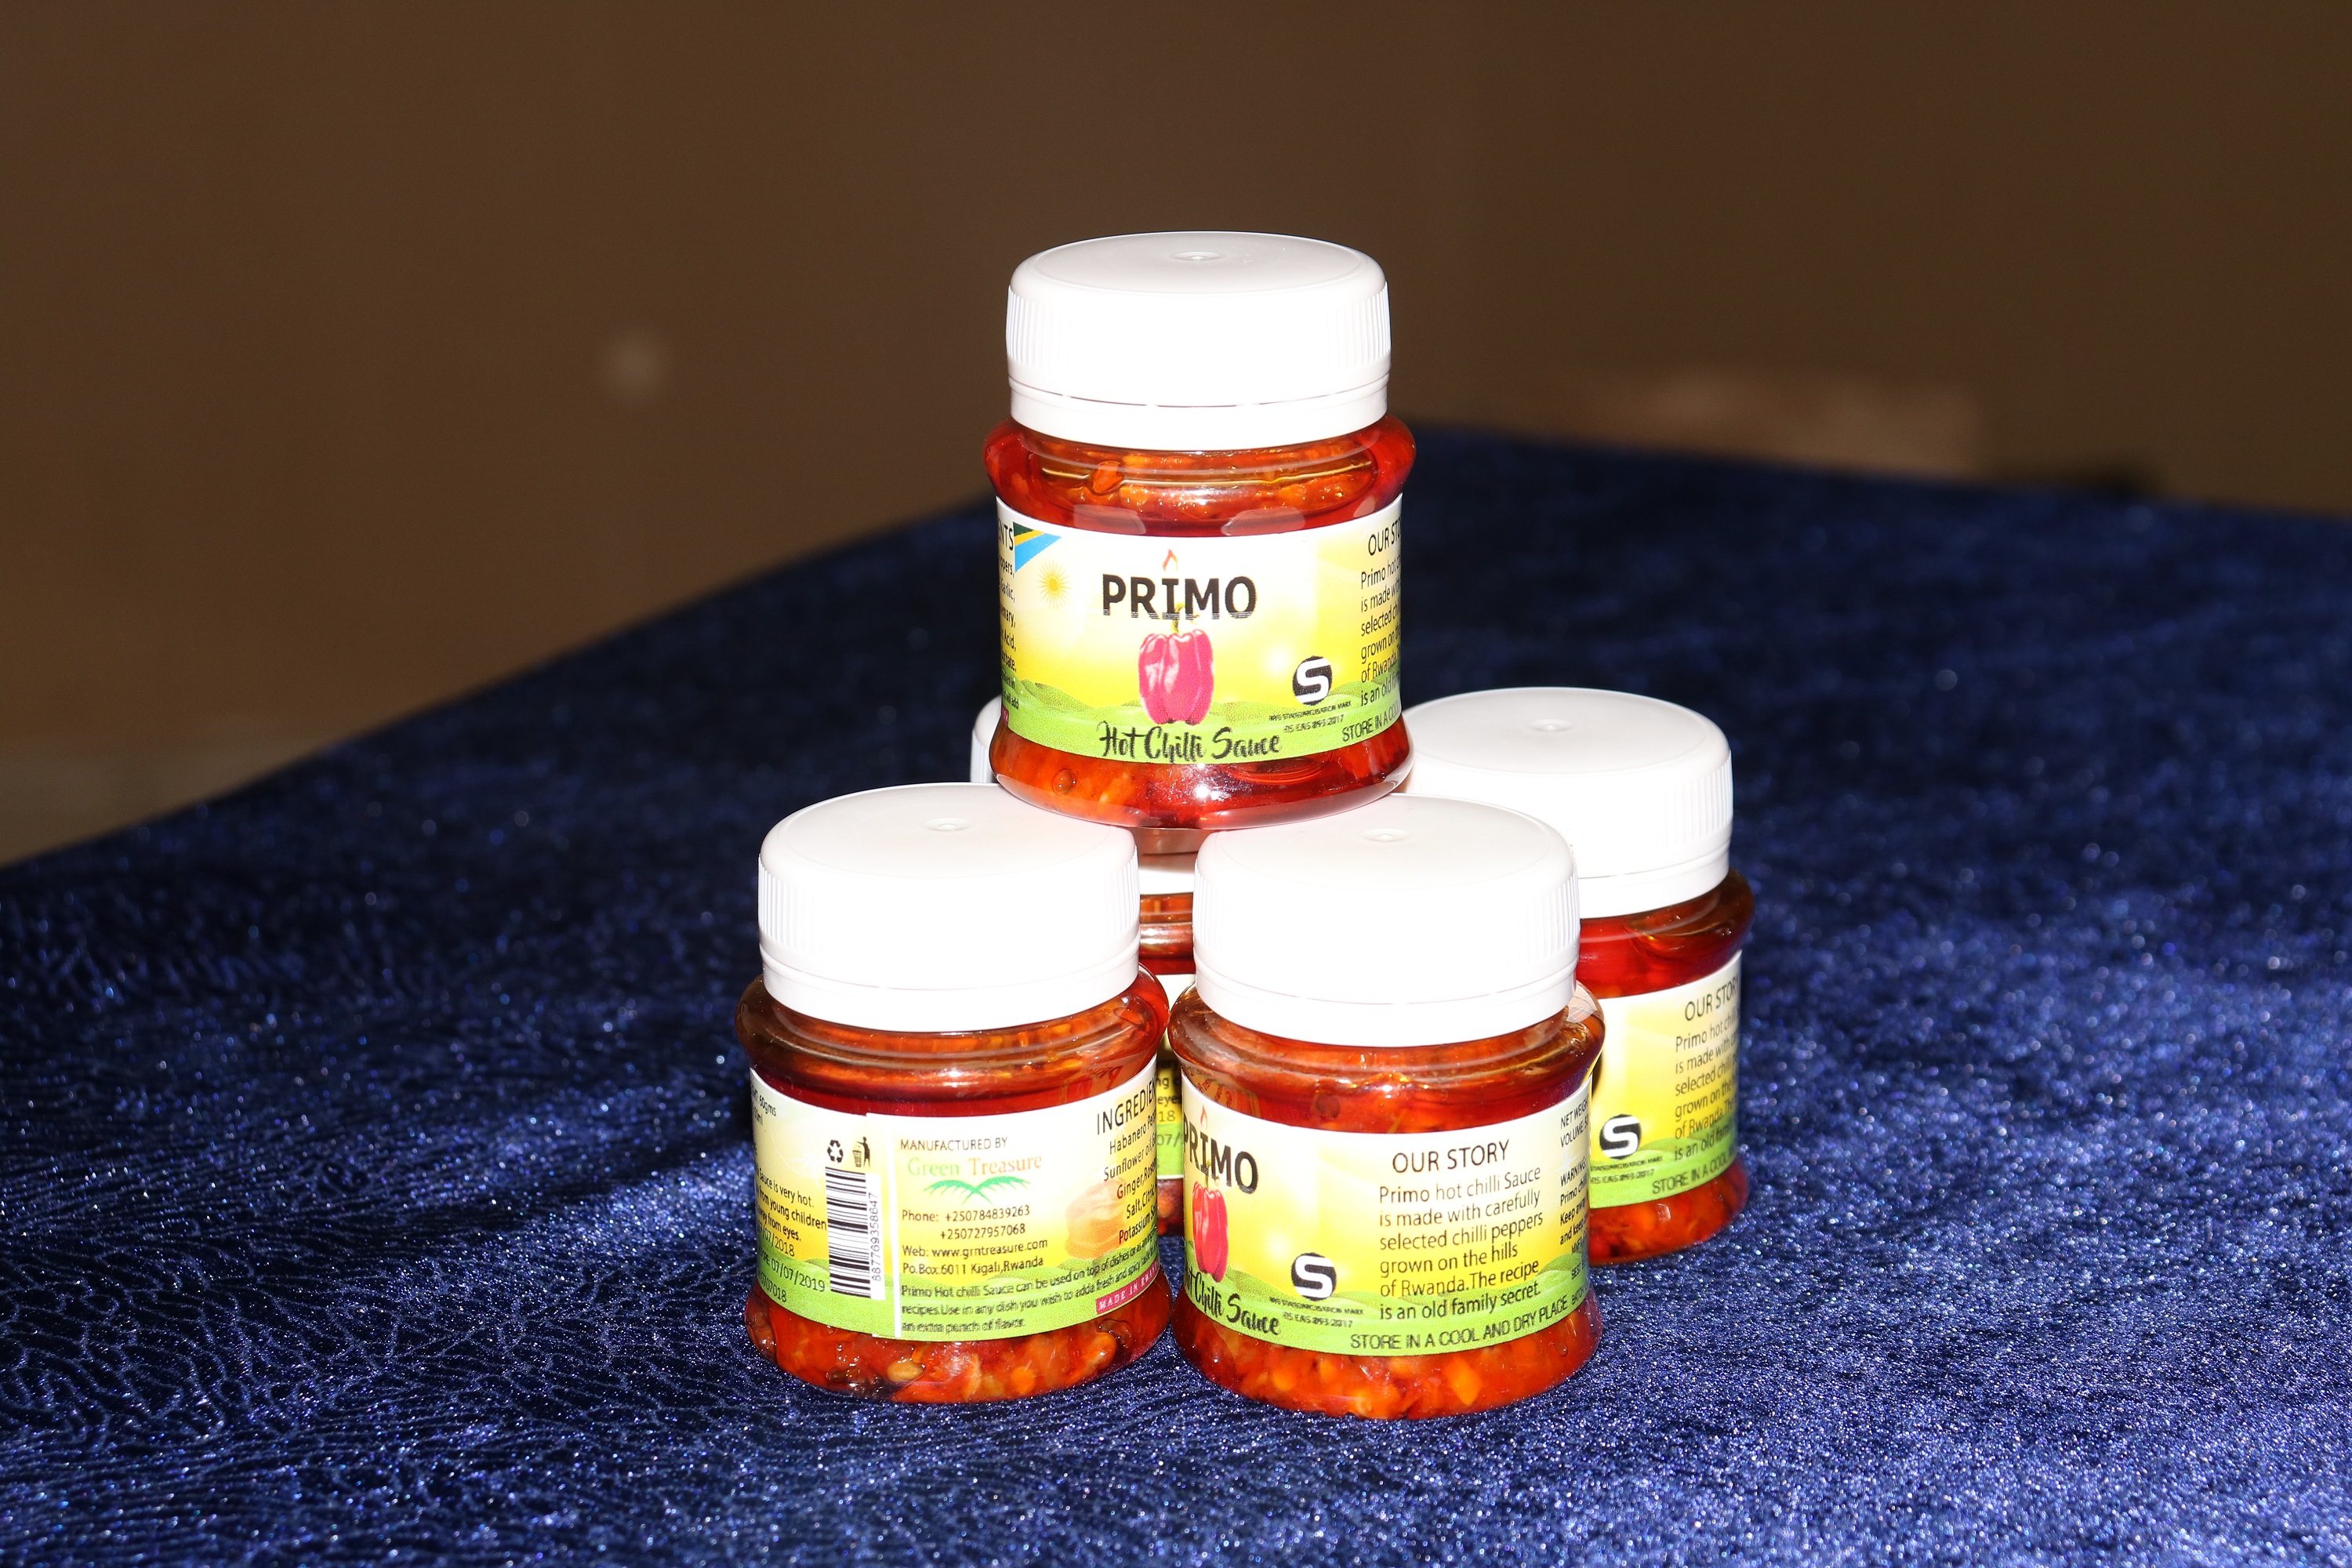 Several jars of Primo Chili Sauce